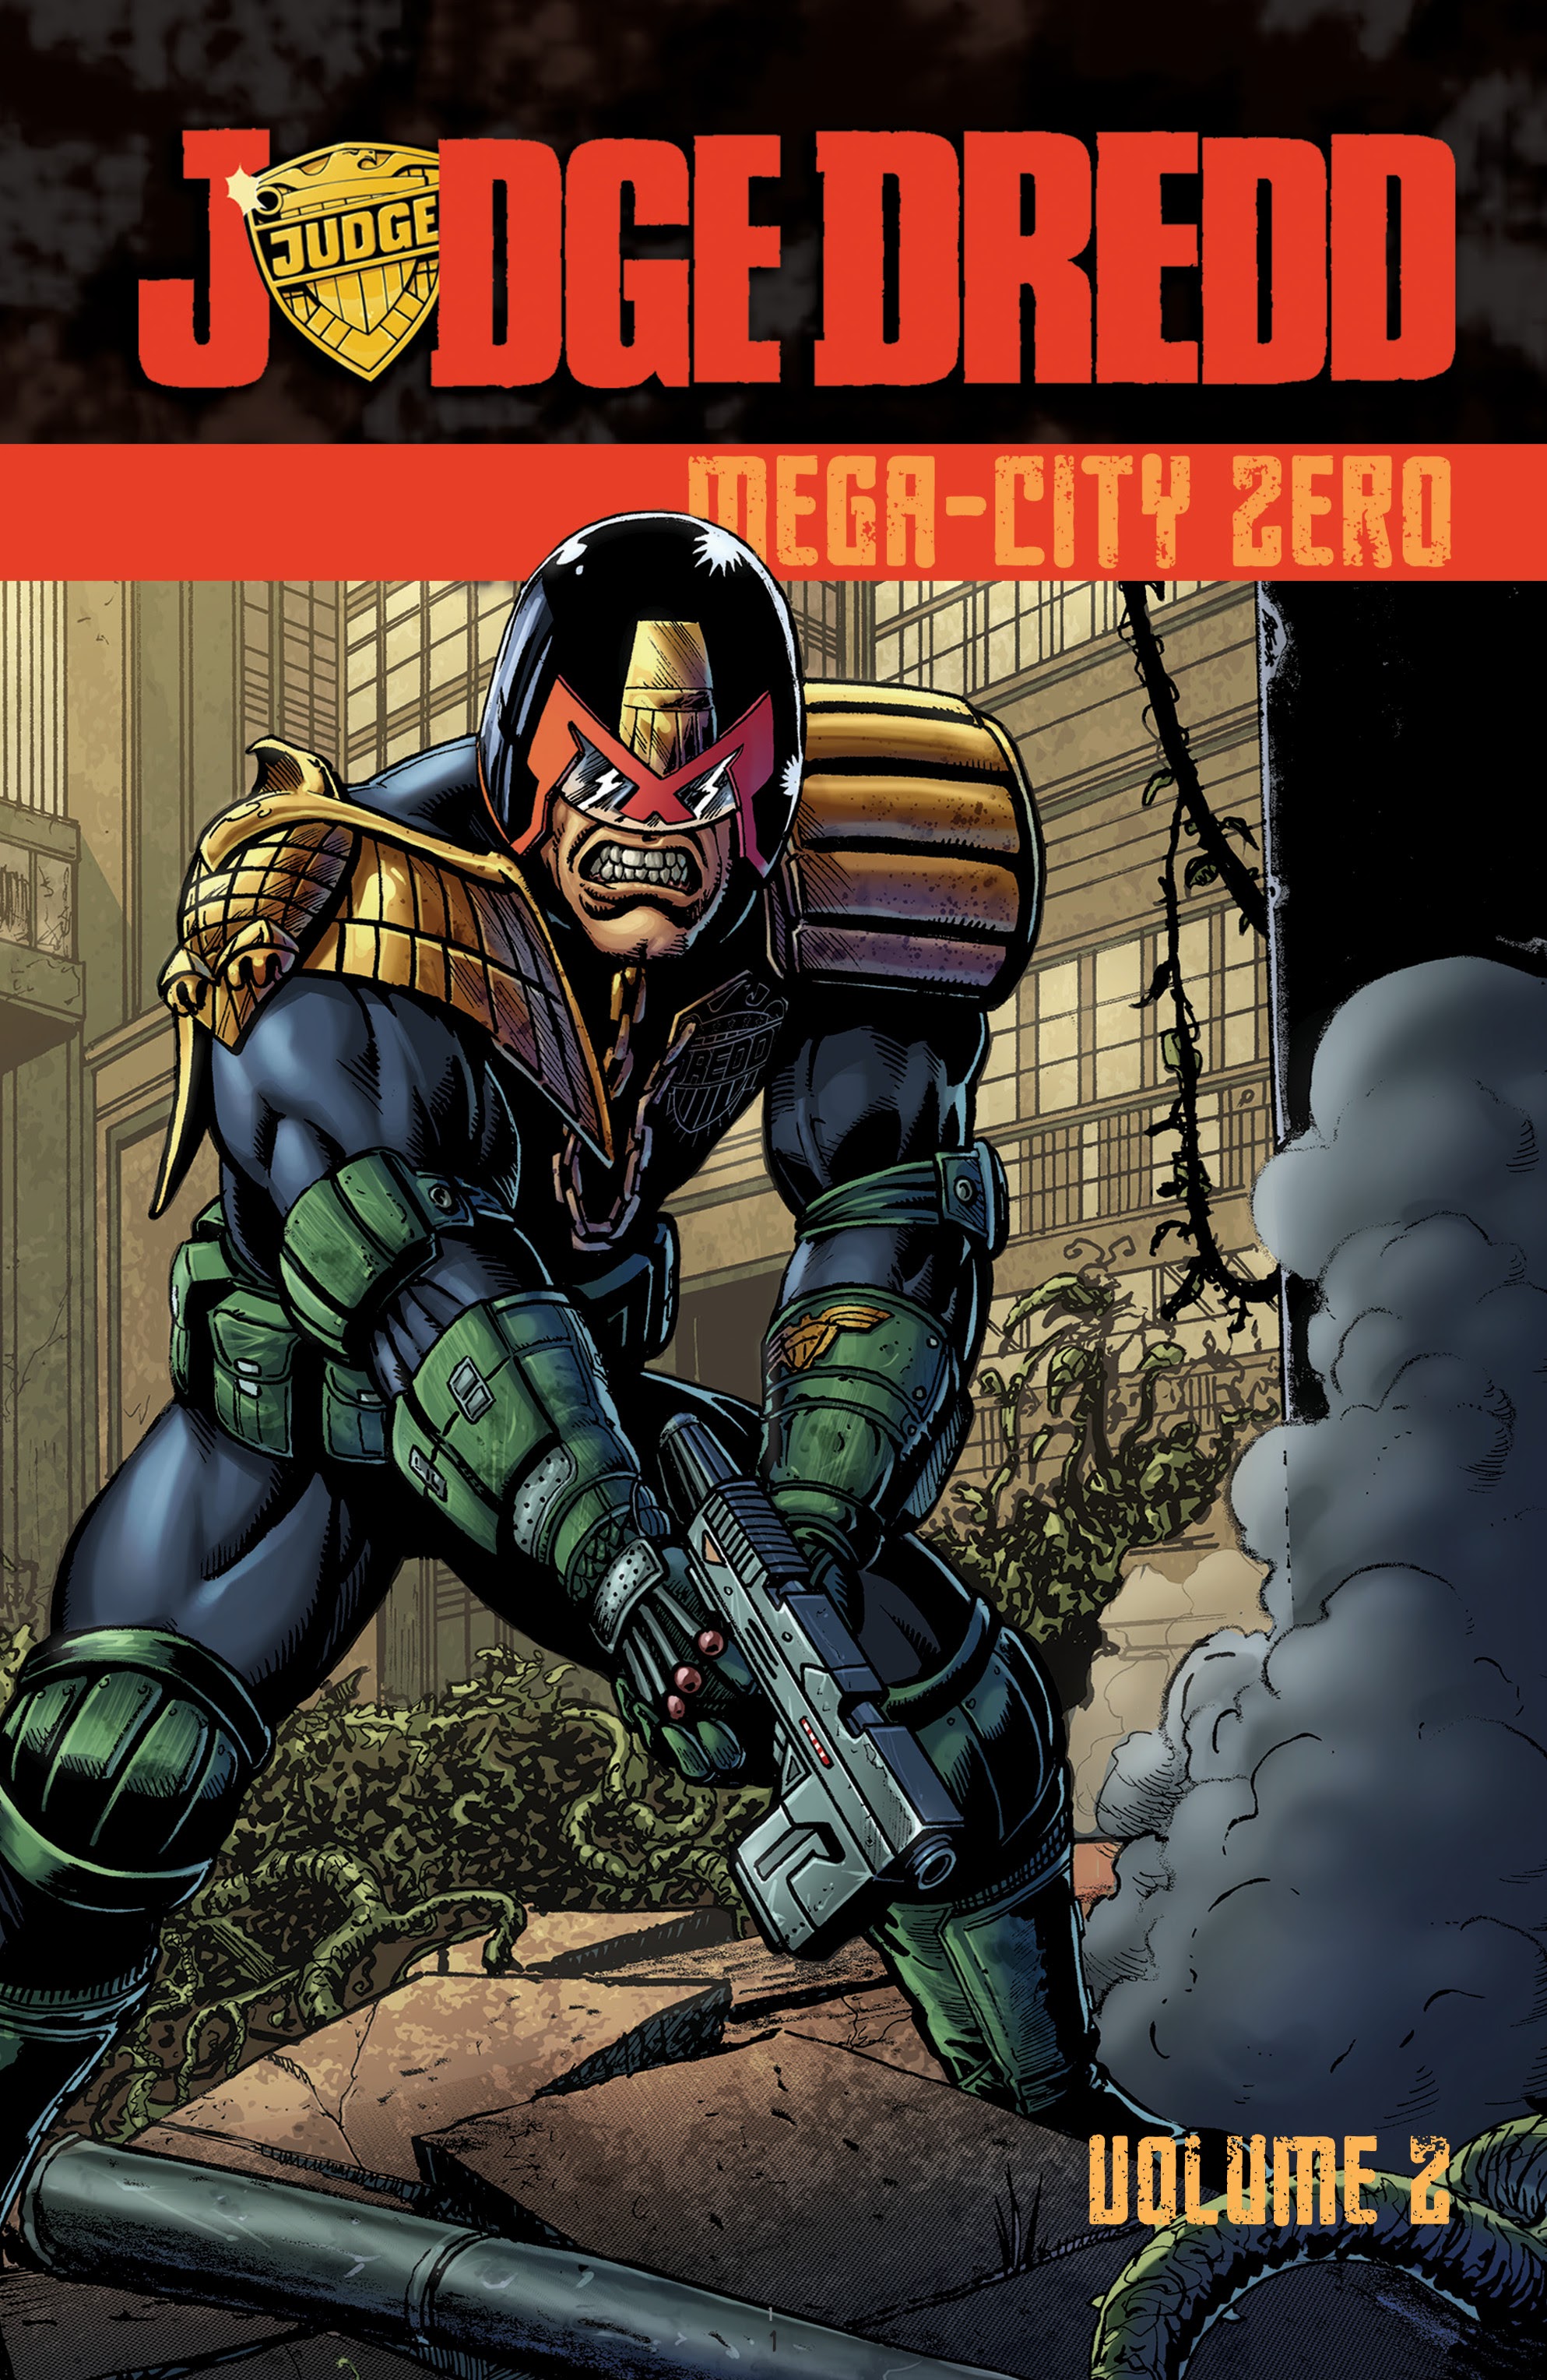 Read online Judge Dredd: Mega-City Zero comic -  Issue # TPB 2 - 2